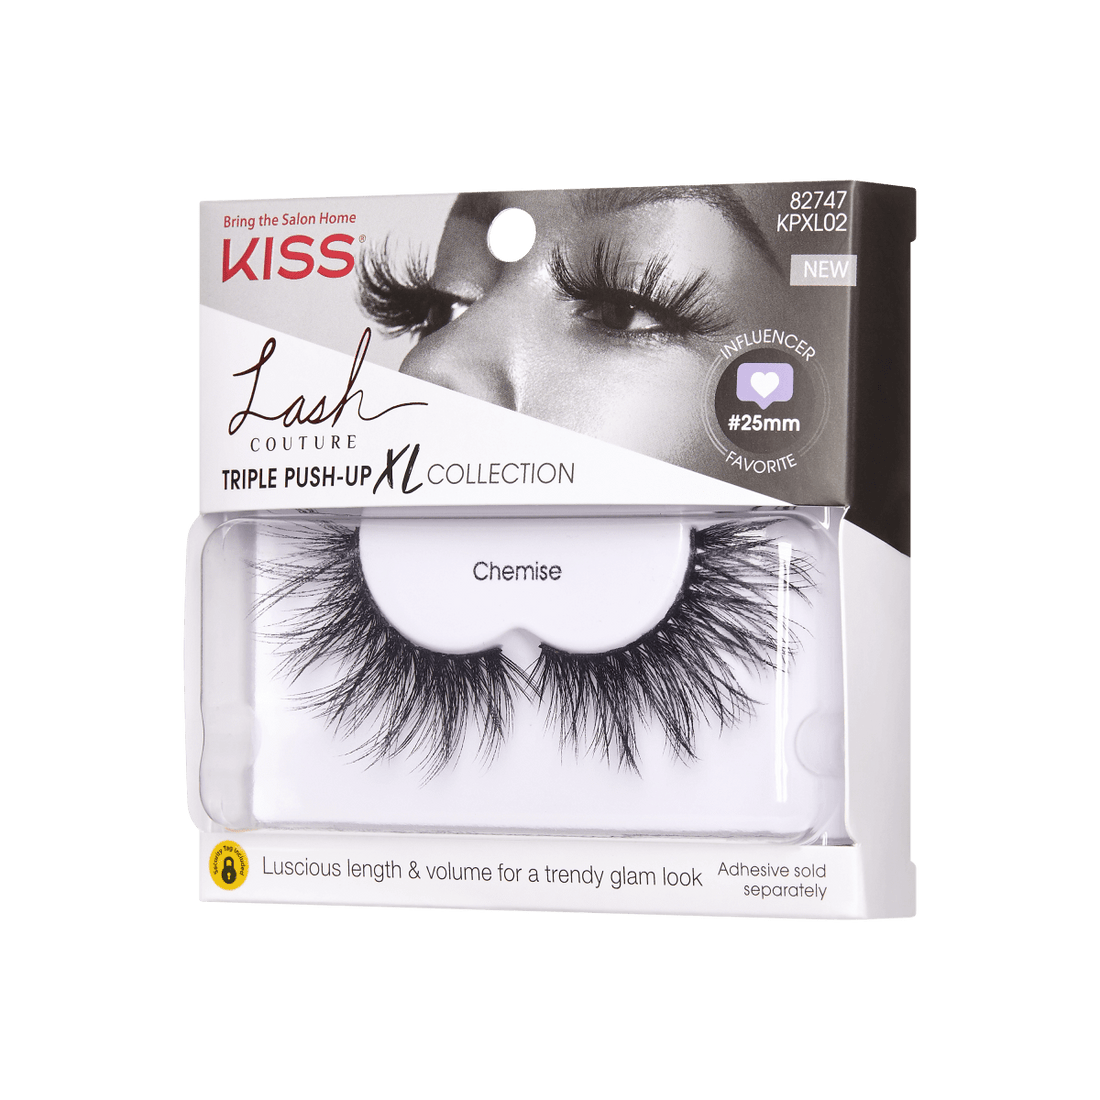 KISS Lash Couture Triple Push-Up XL, False Eyelashes, XL Collection 02 Chemise, 16mm, 1 Pair